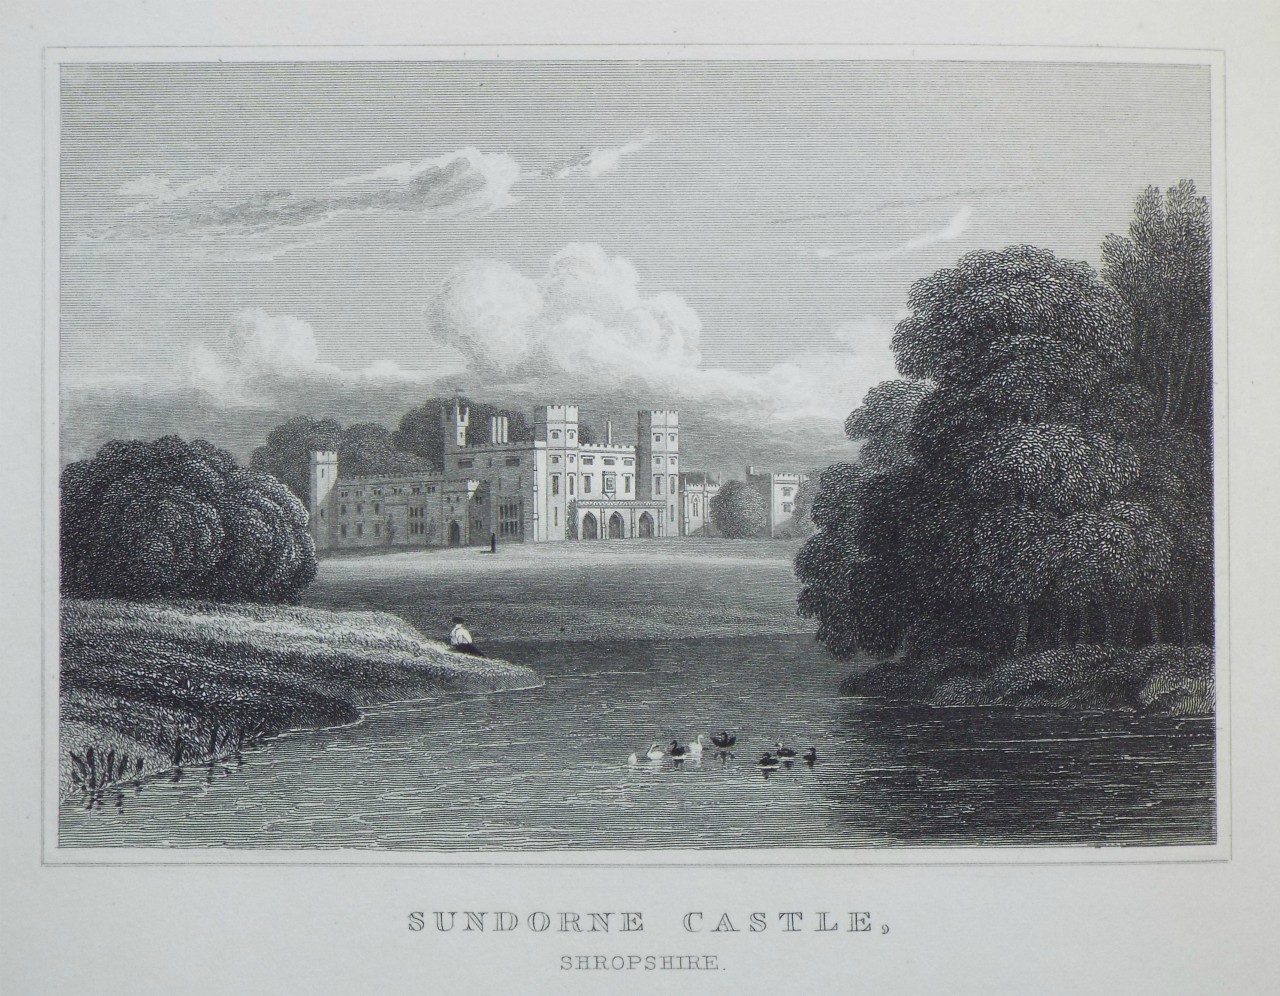 Print - Sundorne Castle, Shropshire. - Radclyffe